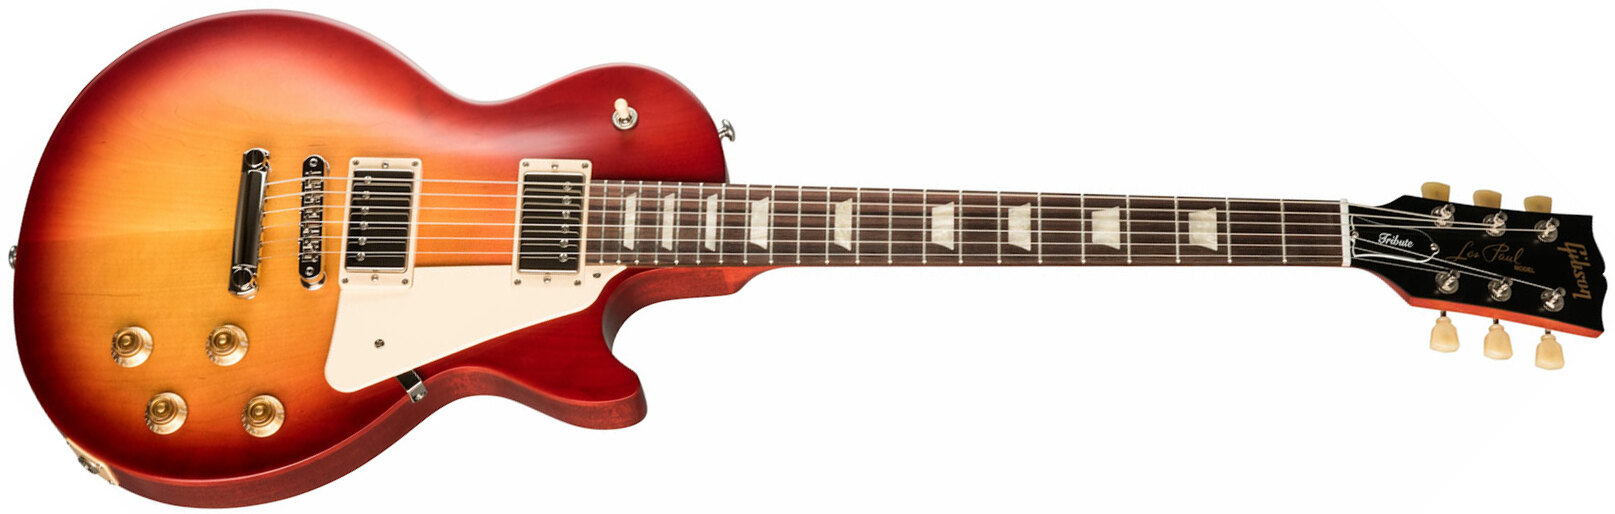 Gibson Les Paul Tribute Modern 2h Ht Rw - Satin Cherry Sunburst - Enkel gesneden elektrische gitaar - Main picture